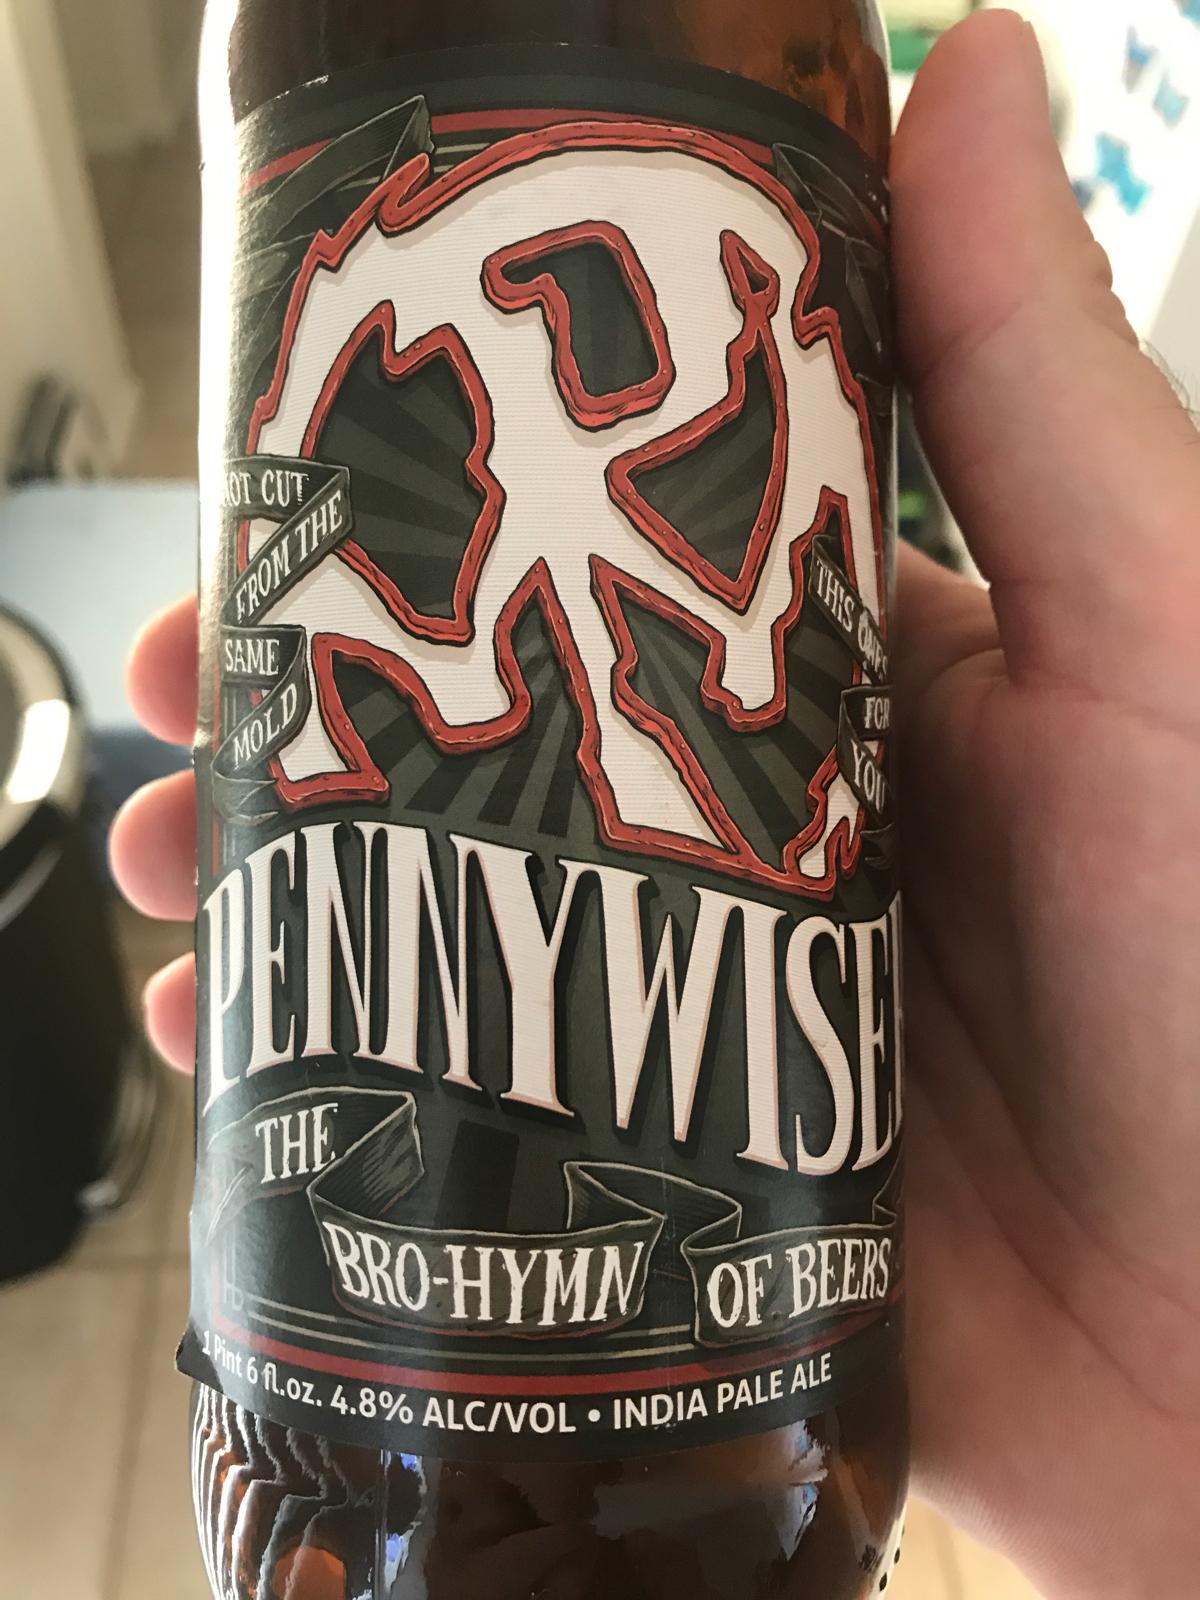 Pennywiser